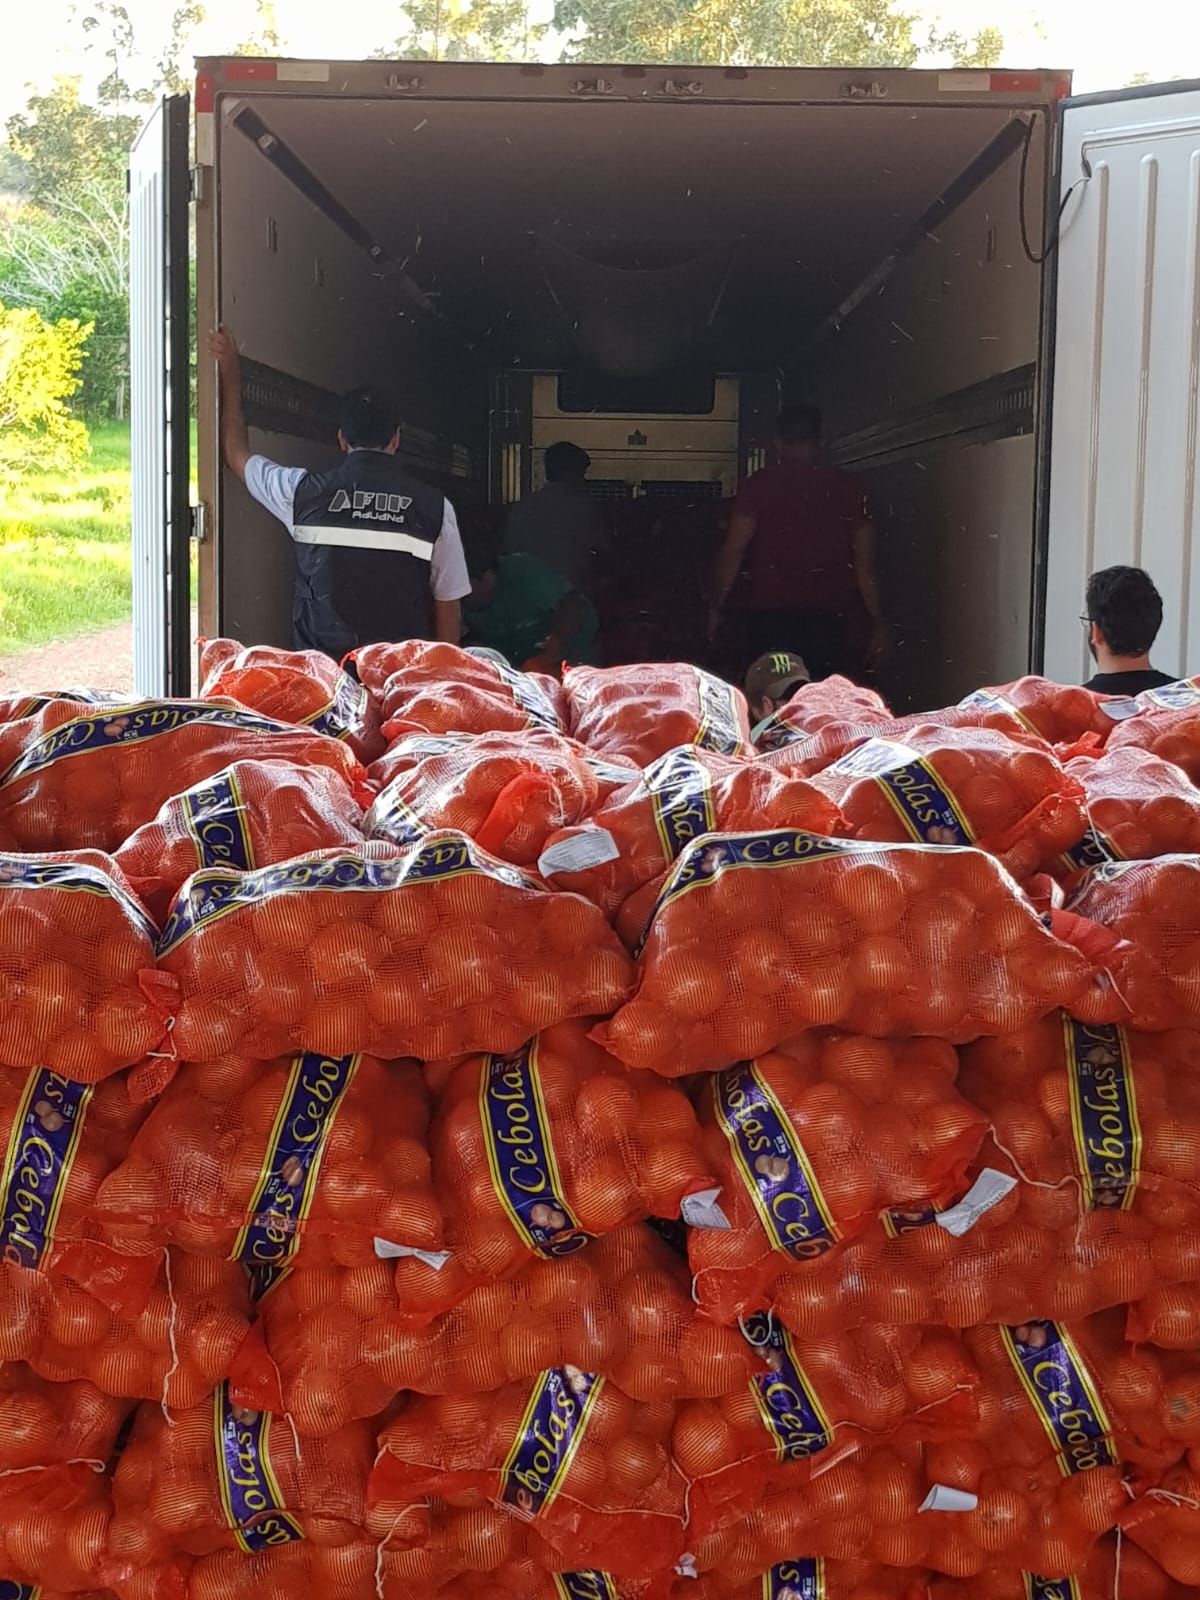 Aduana advirtió irregularidades en una exportación de 28 toneladas de cebollas a Brasil a través de Corrientes imagen-6